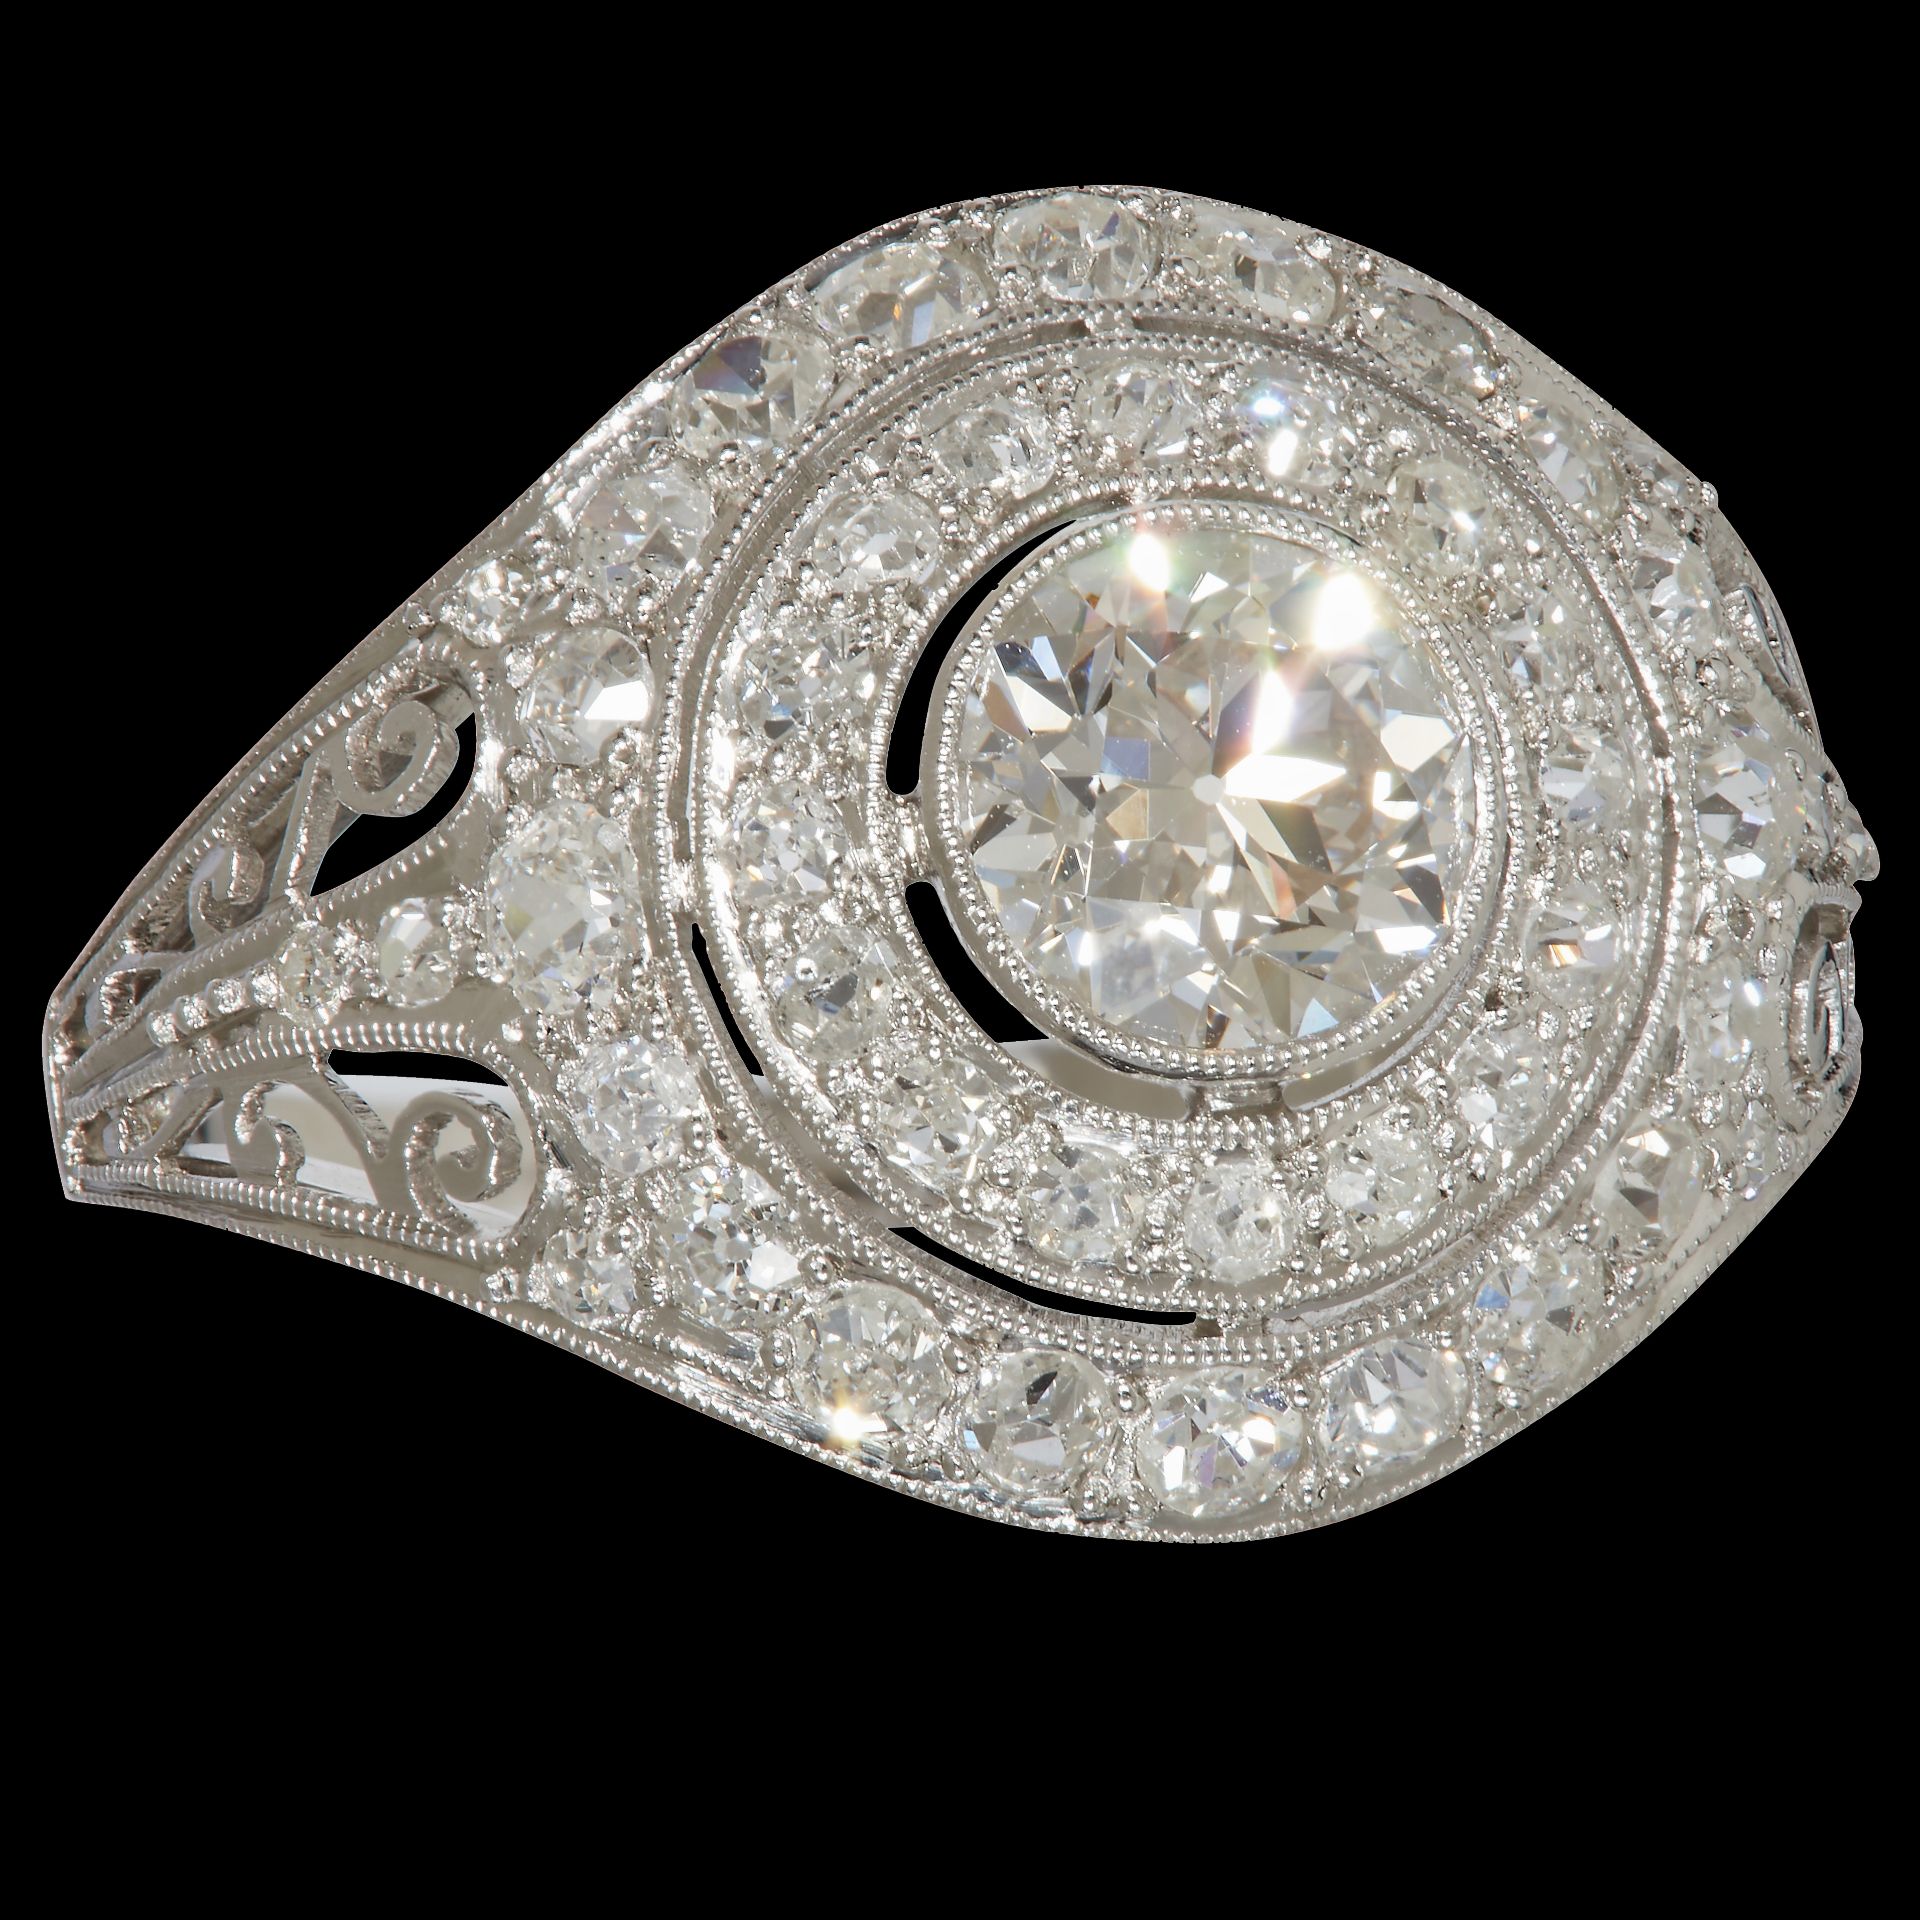 EDWARDIAN DIAMOND CLUSTER RING